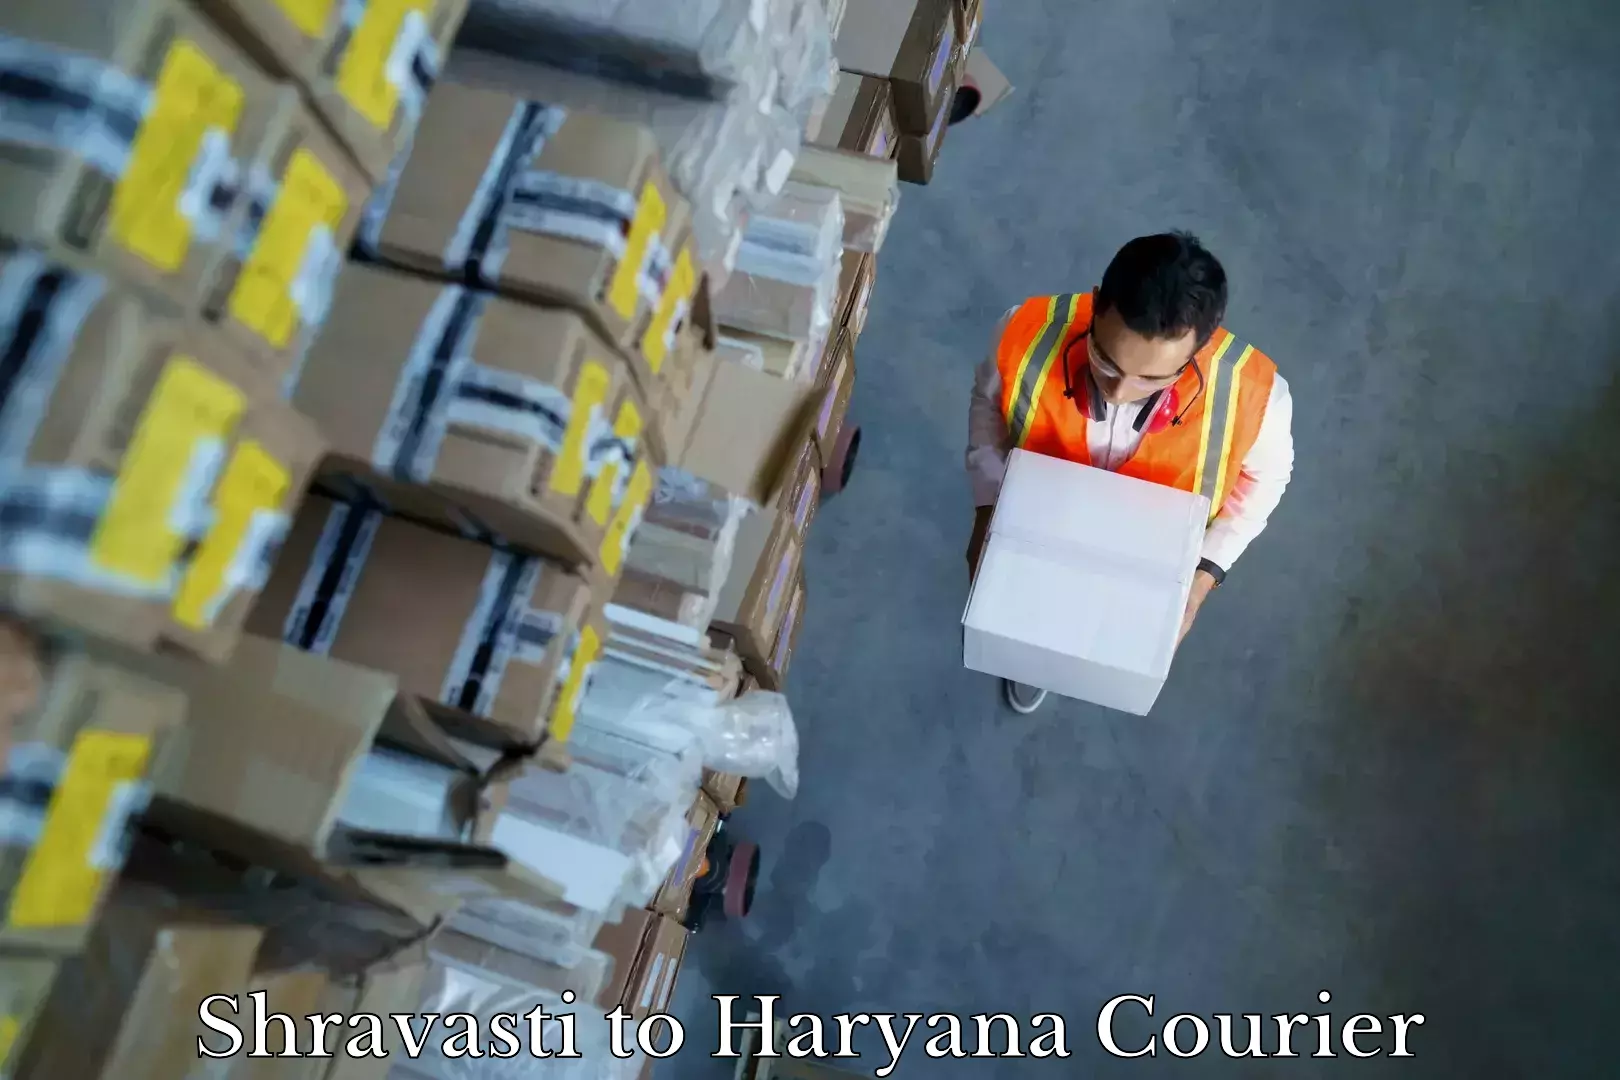 Trusted moving company Shravasti to Hansi